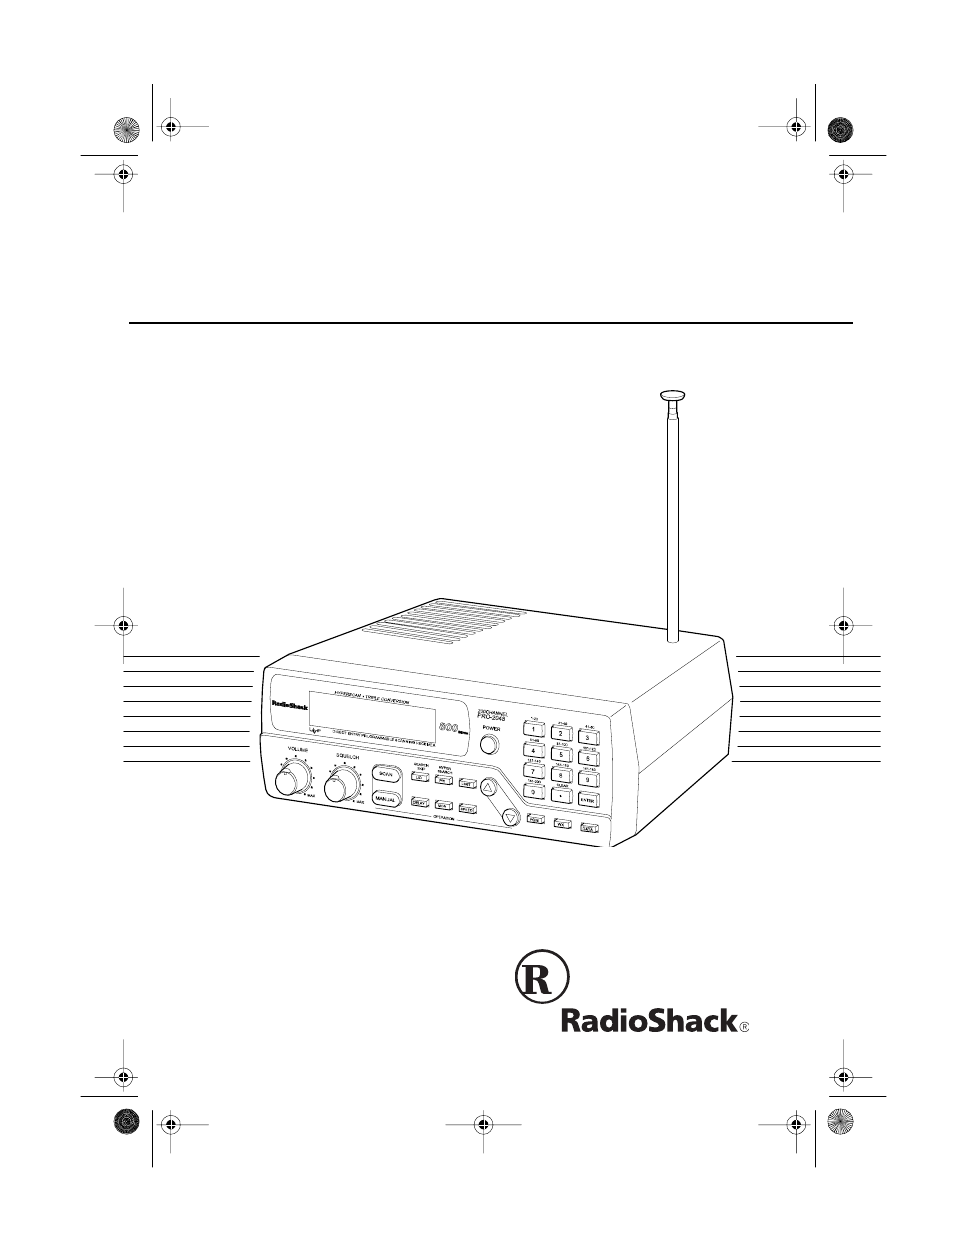 User Manual For Radio Shack Scanner Pro 2040 - browneternal